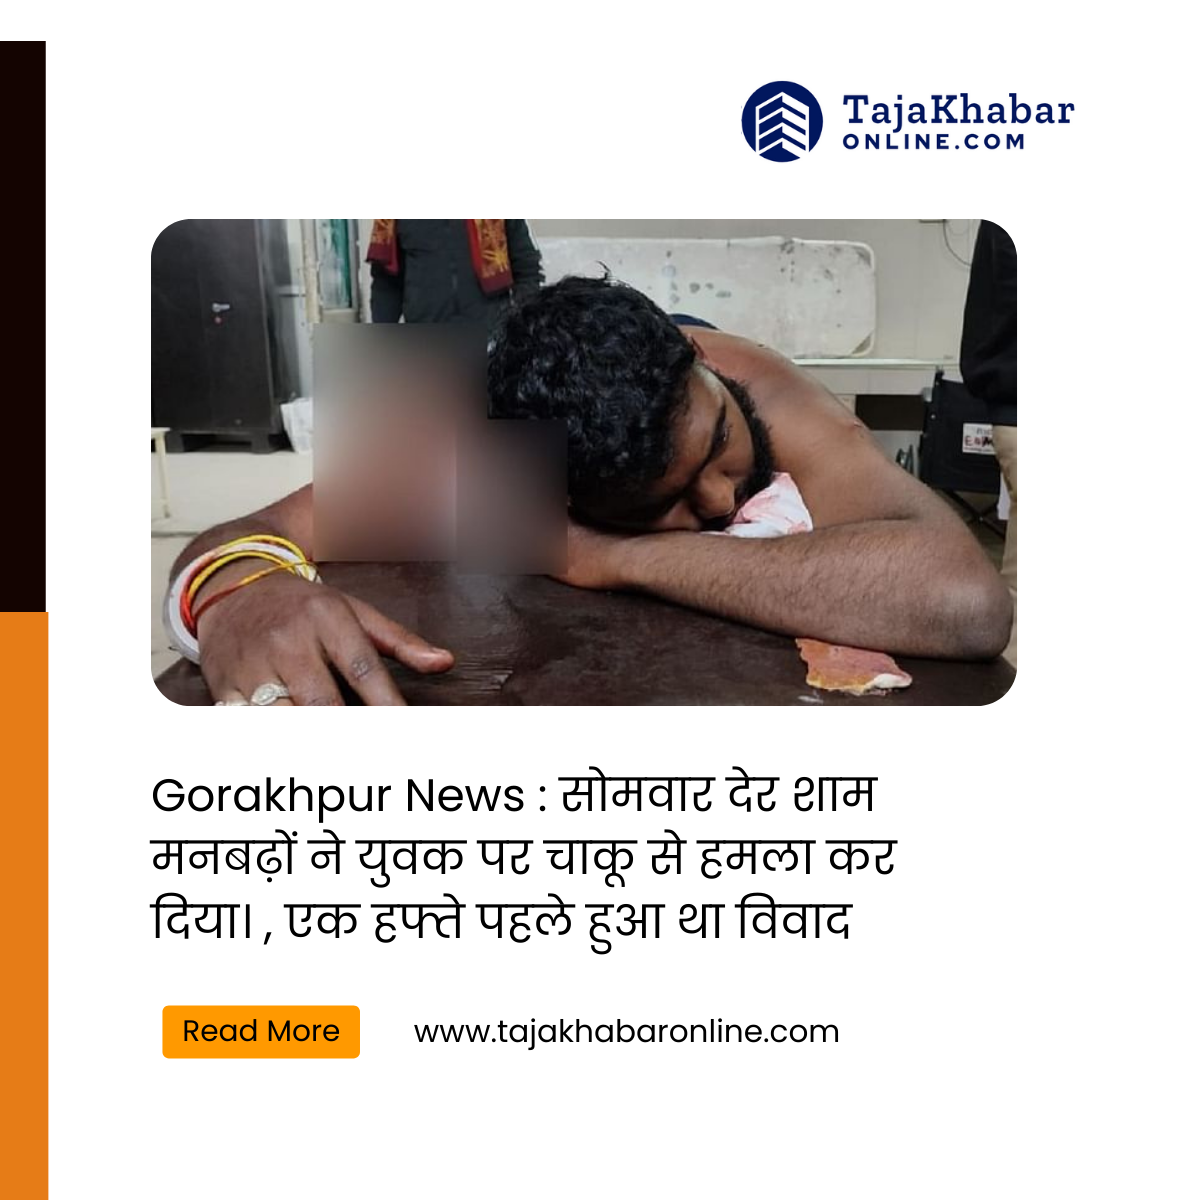 Gorakhpur News